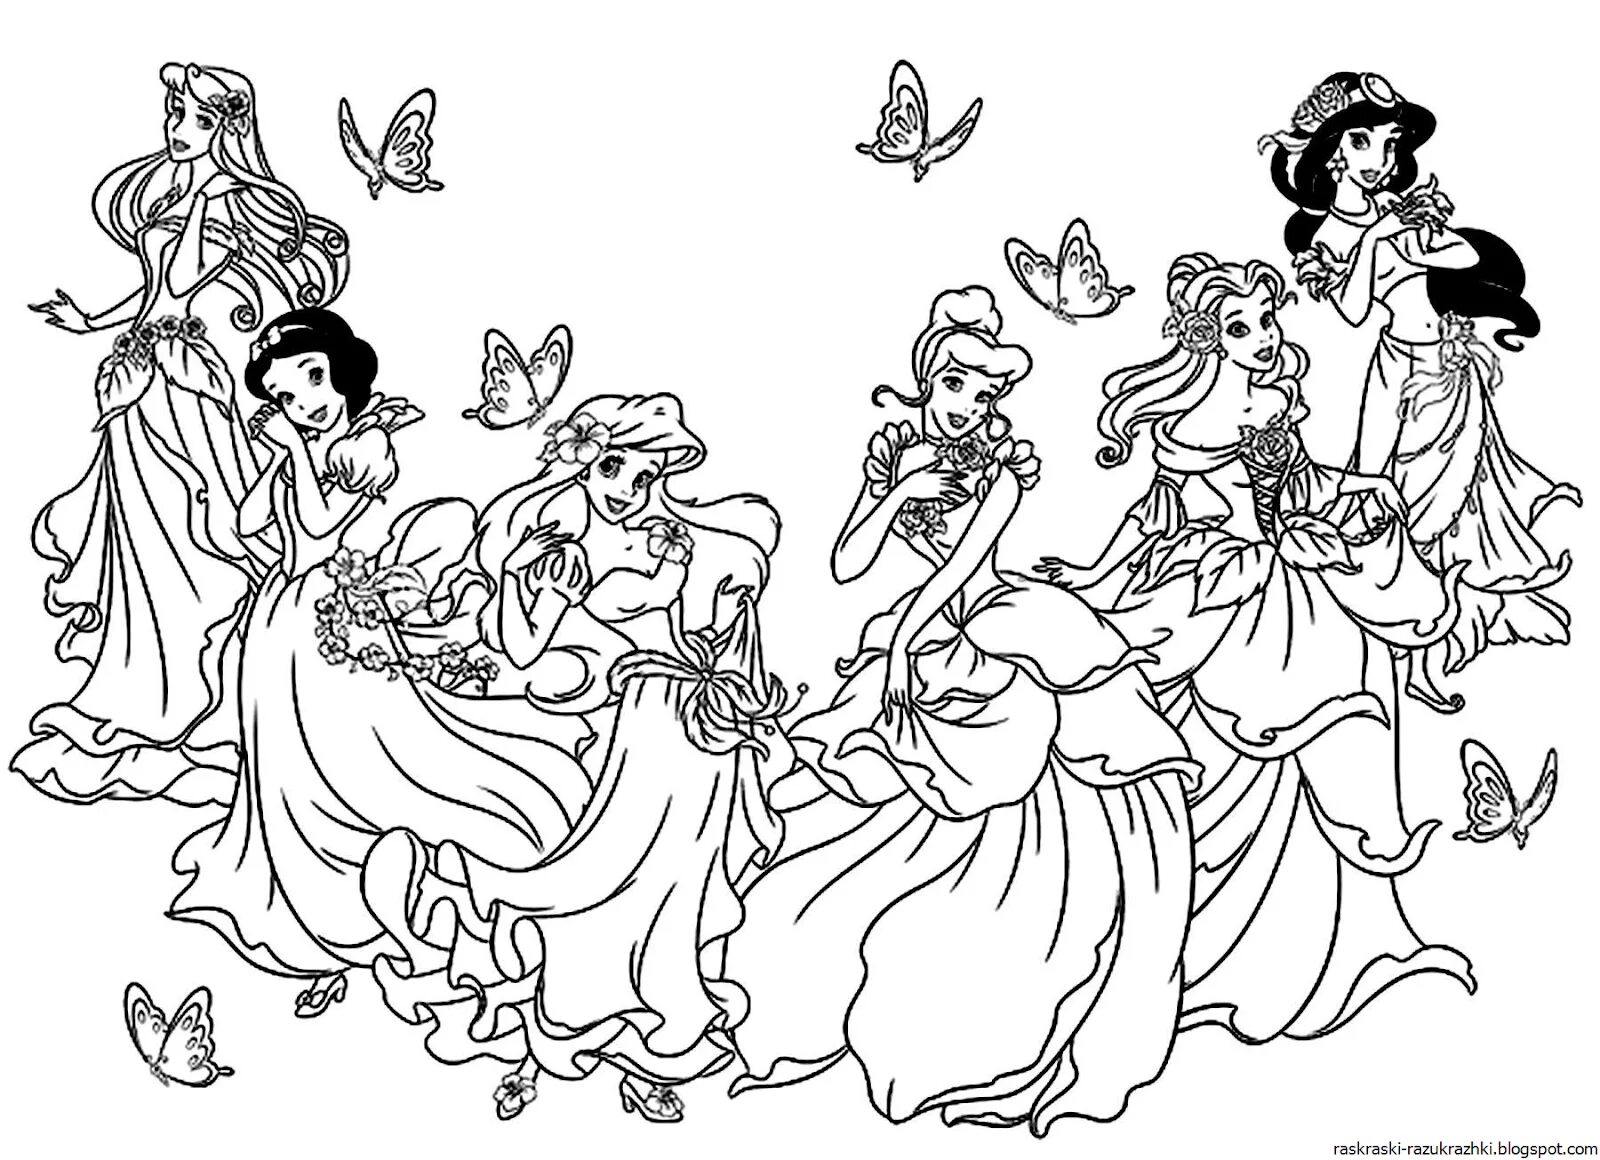 Princesses in one file #8